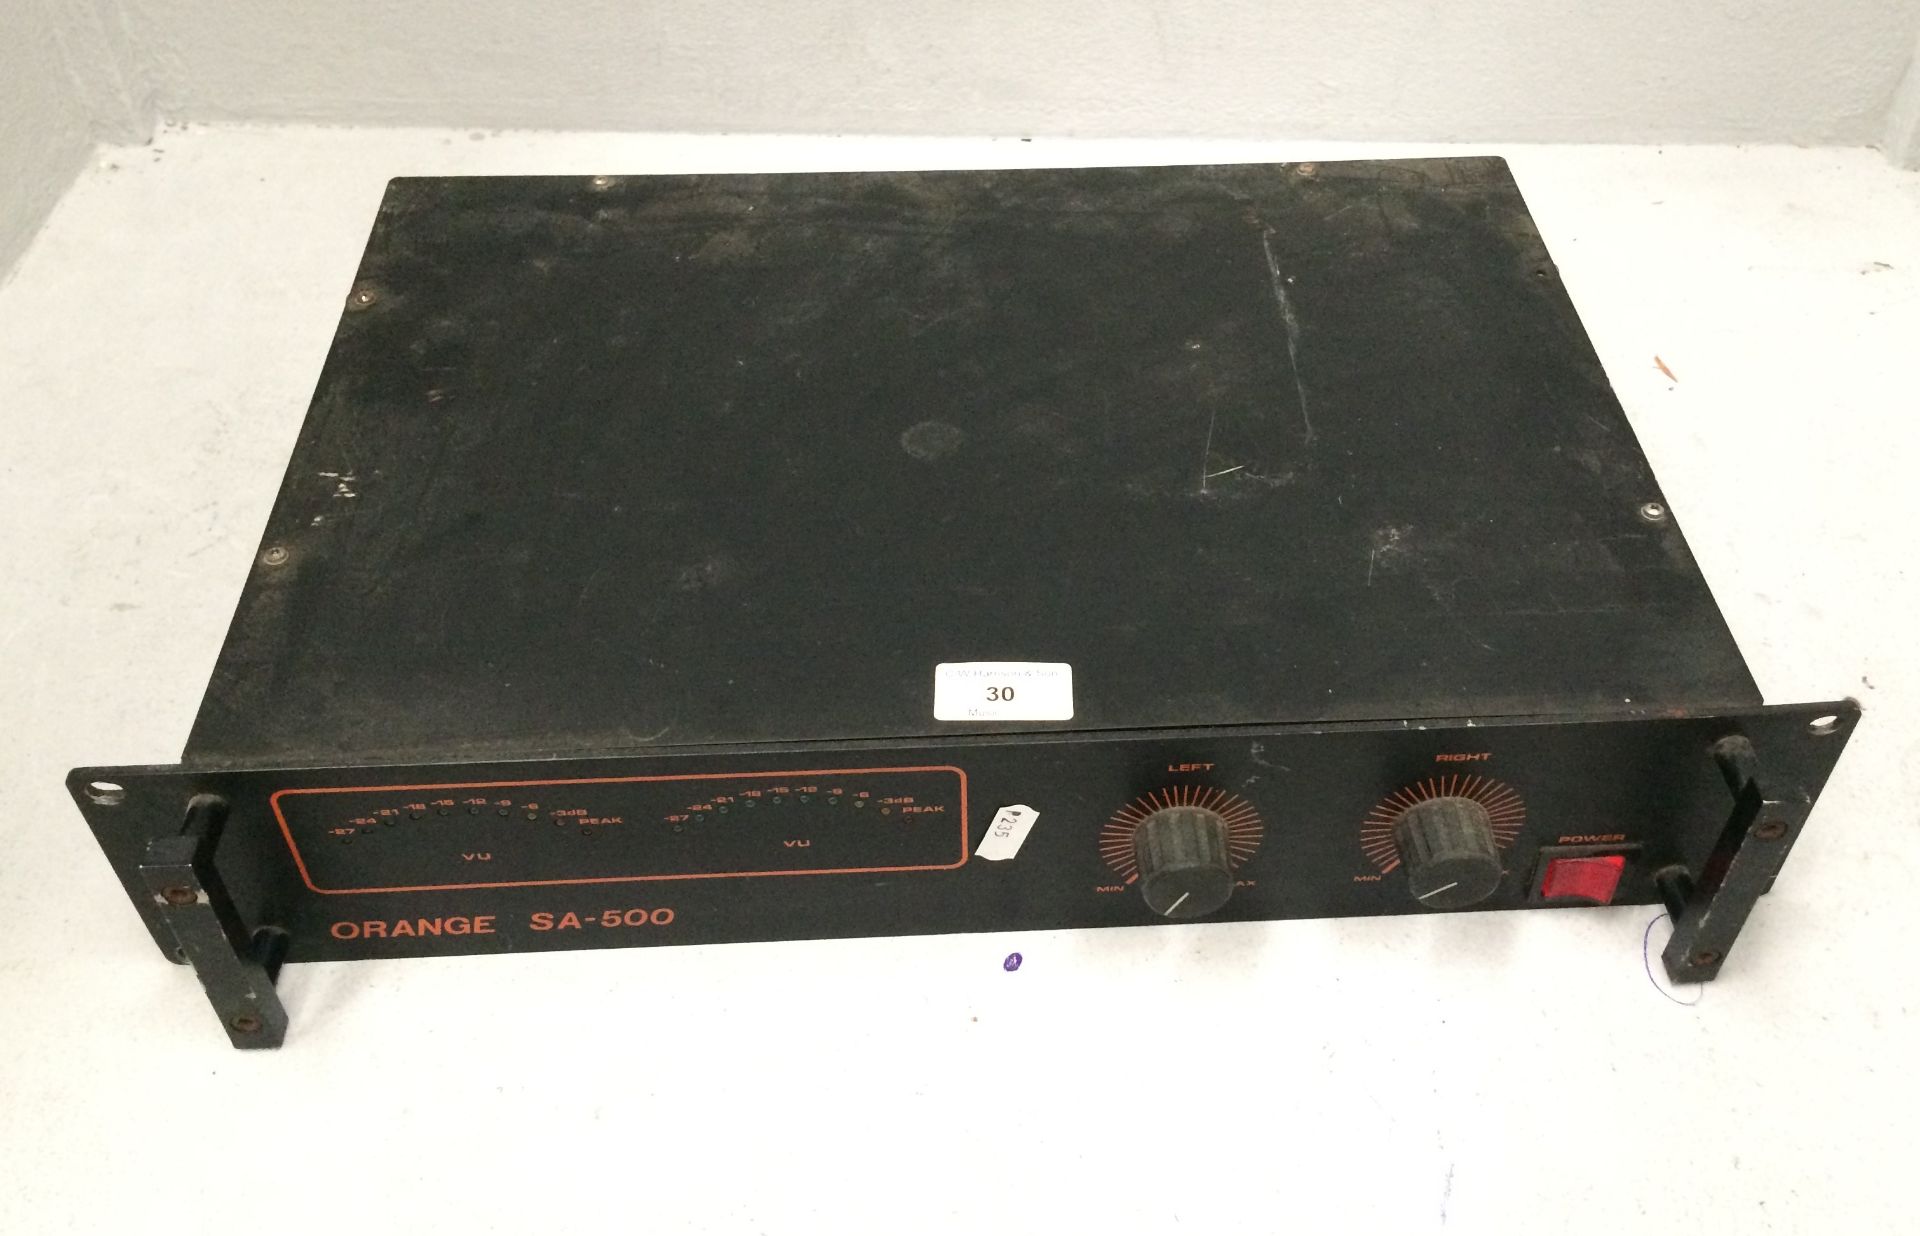 Orange SA-500 amplifier